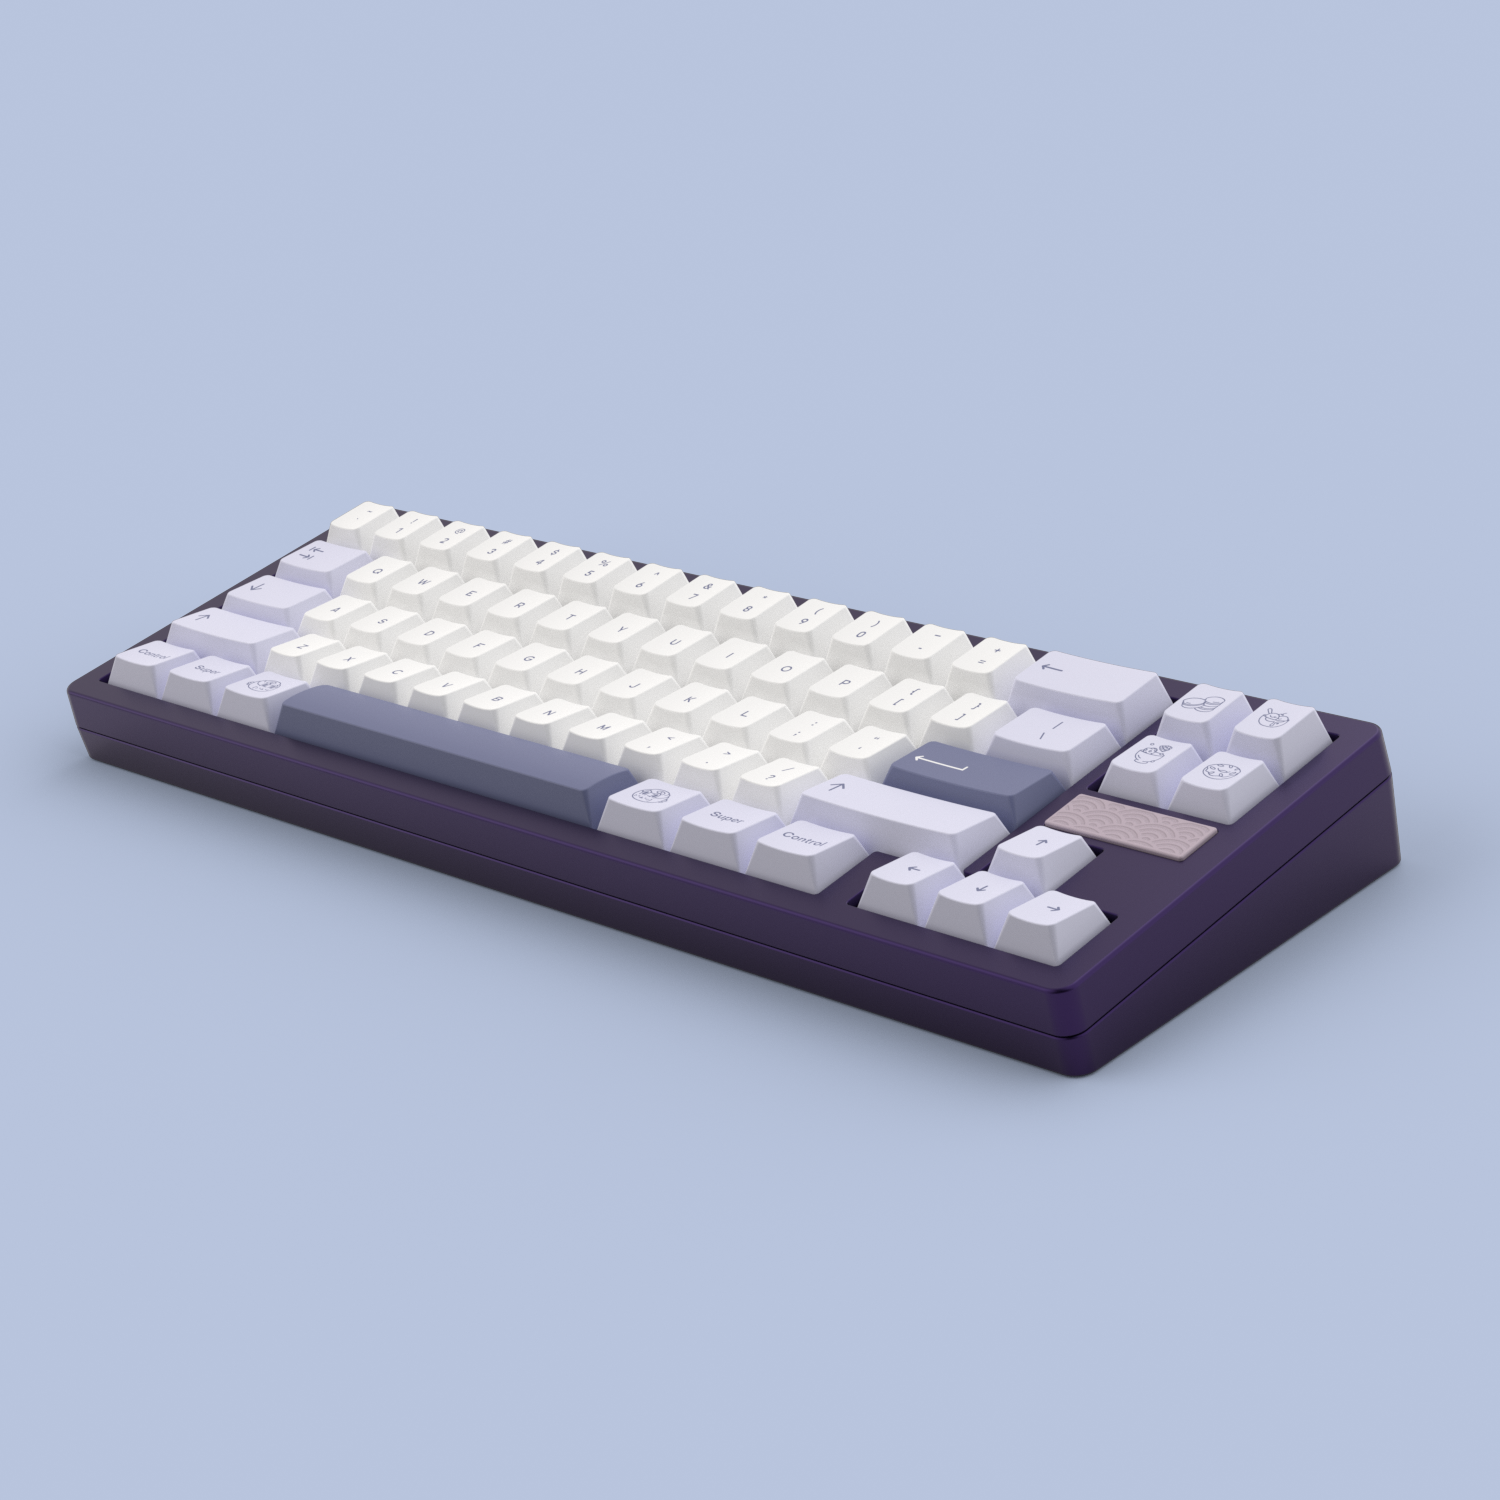 RENDER: Teacaps Parfait keycaps on a purple Ikki68 Devoted keyboard.